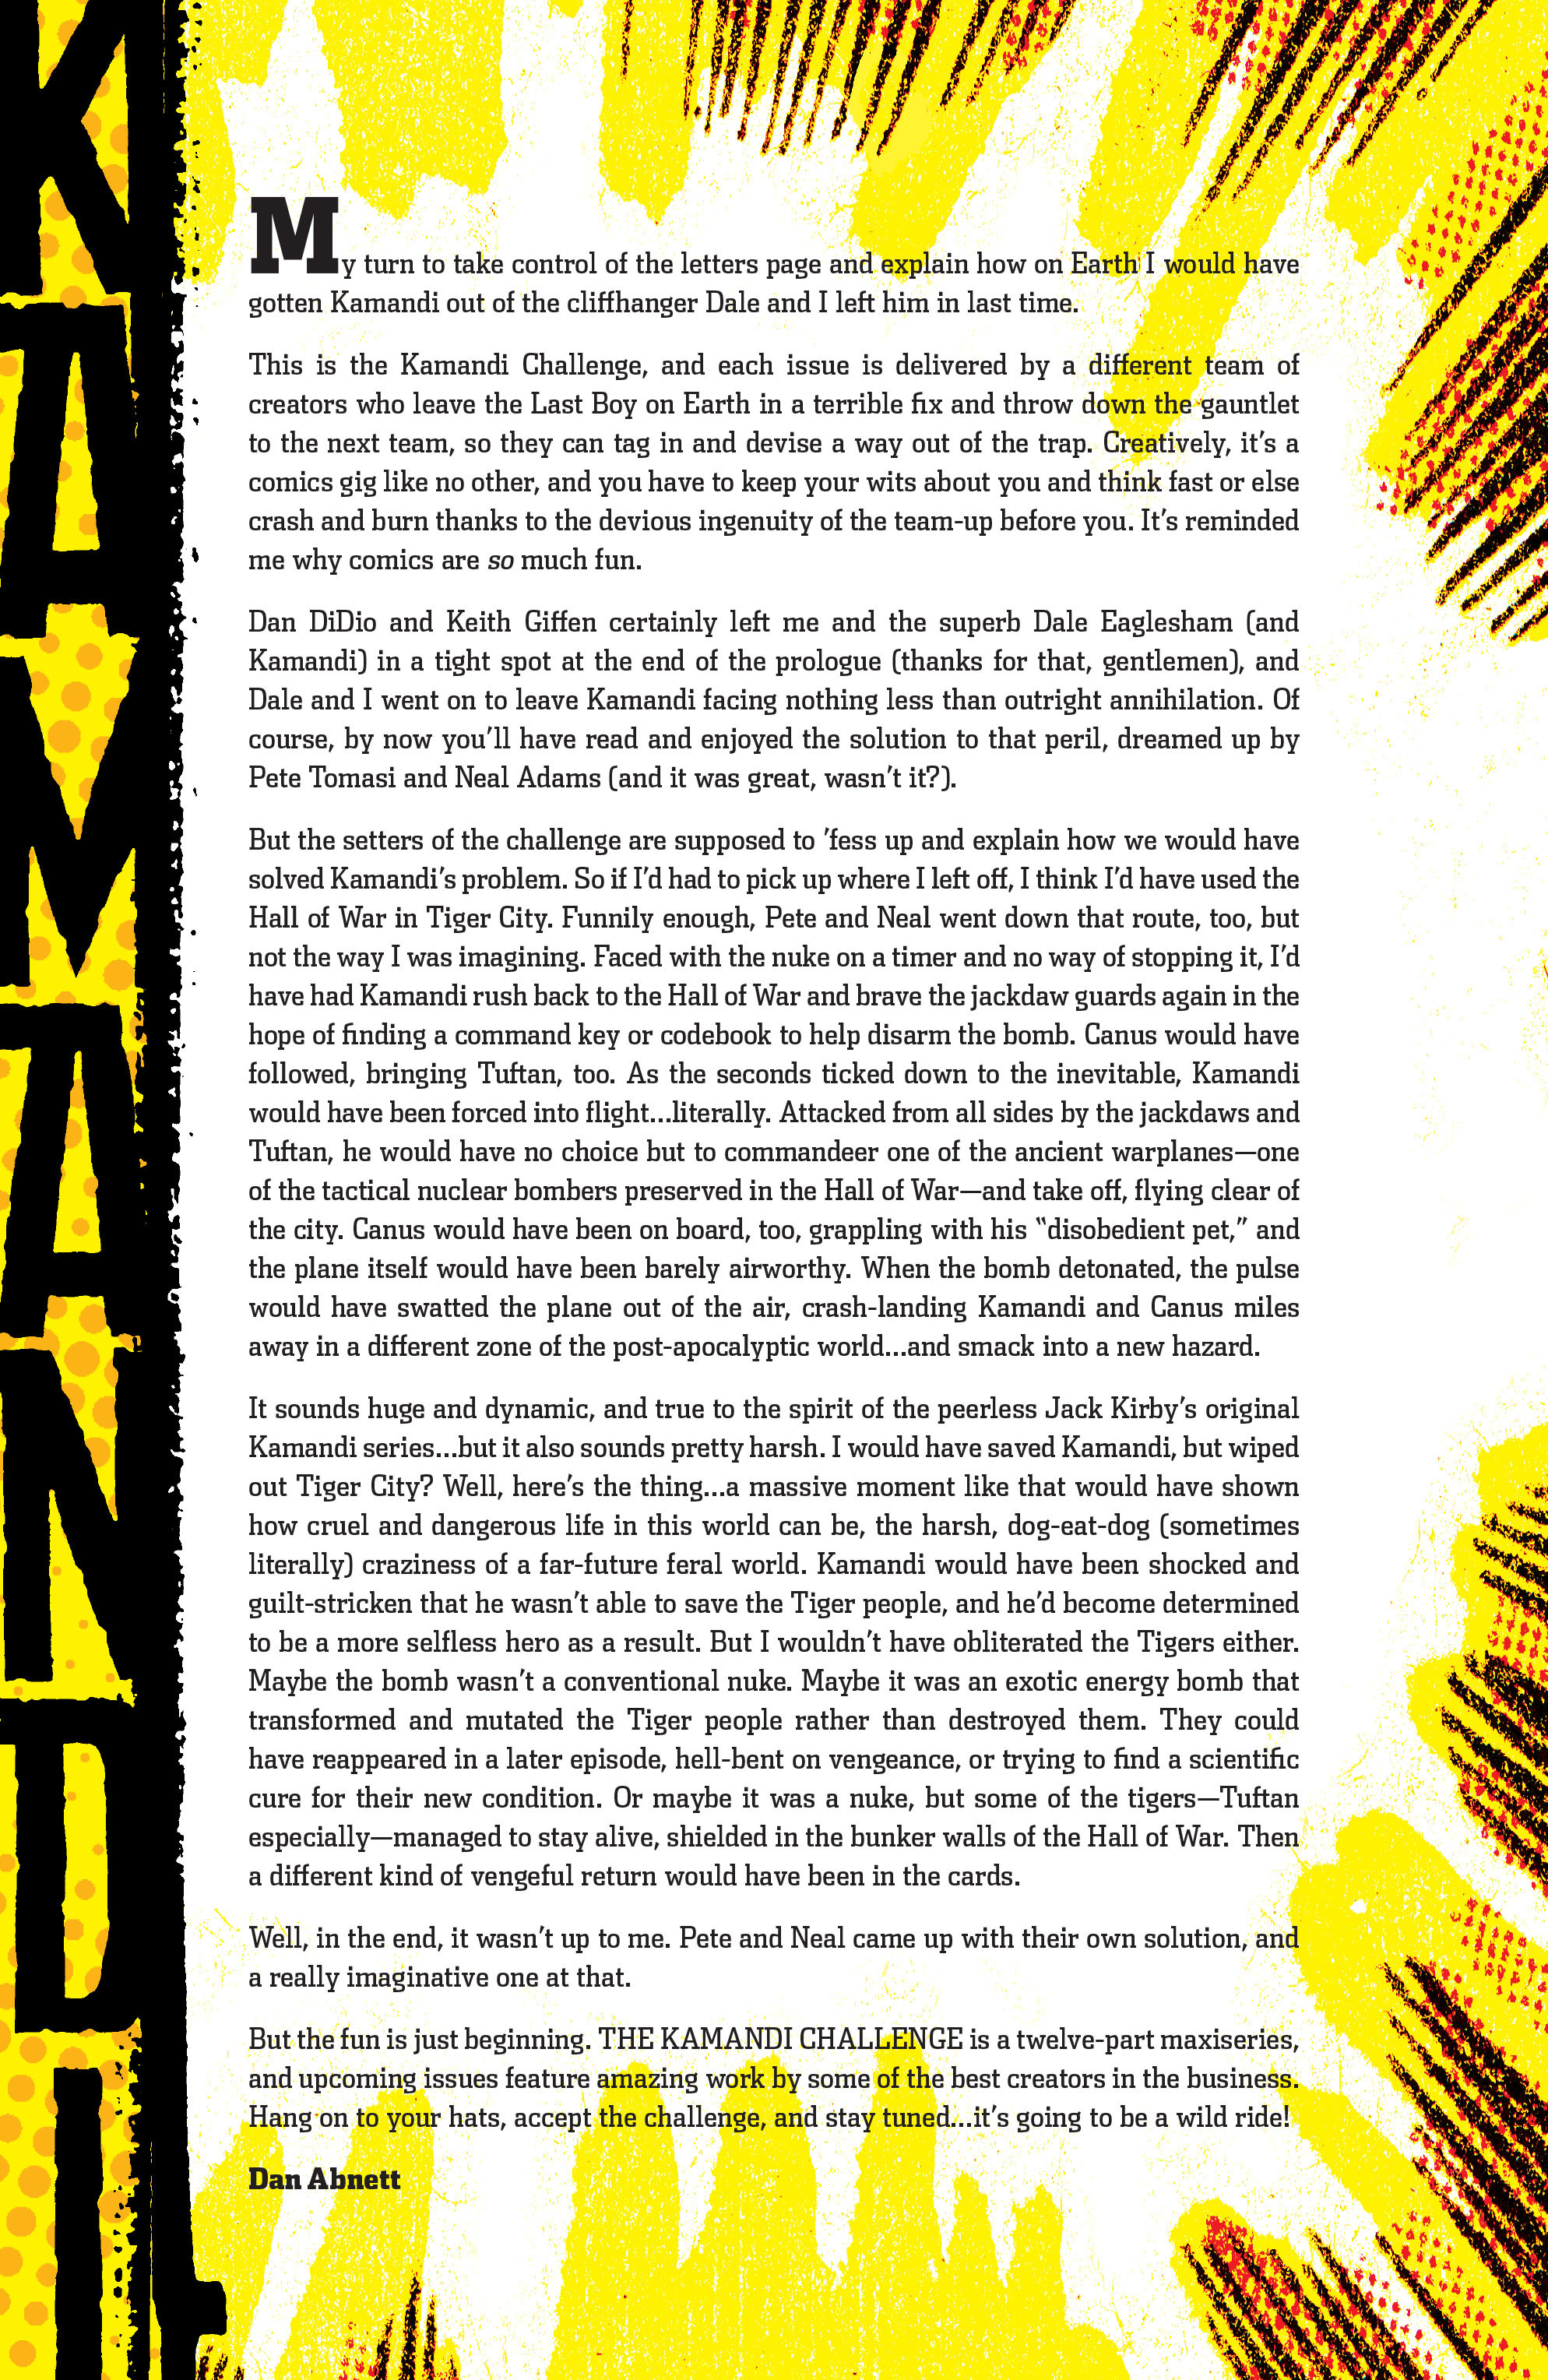 Read online The Kamandi Challenge comic -  Issue #2 - 29